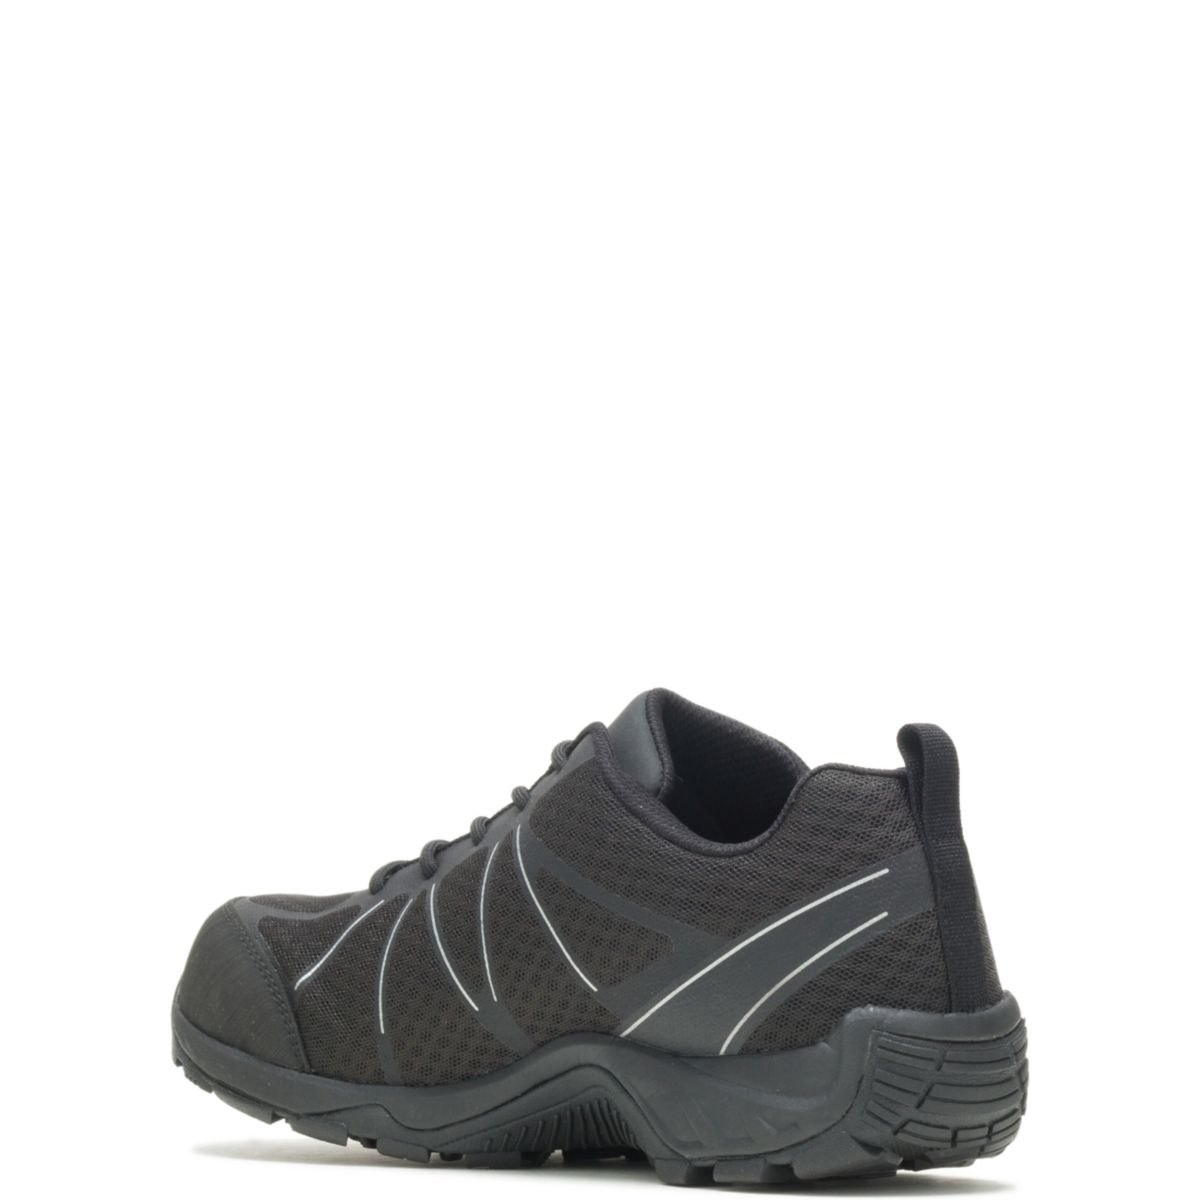 WOLVERINE Men's Amherst II CarbonMAXÂ® Composite Toe Work Shoe Black - W201147 BLACK - BLACK, 13 X-Wide